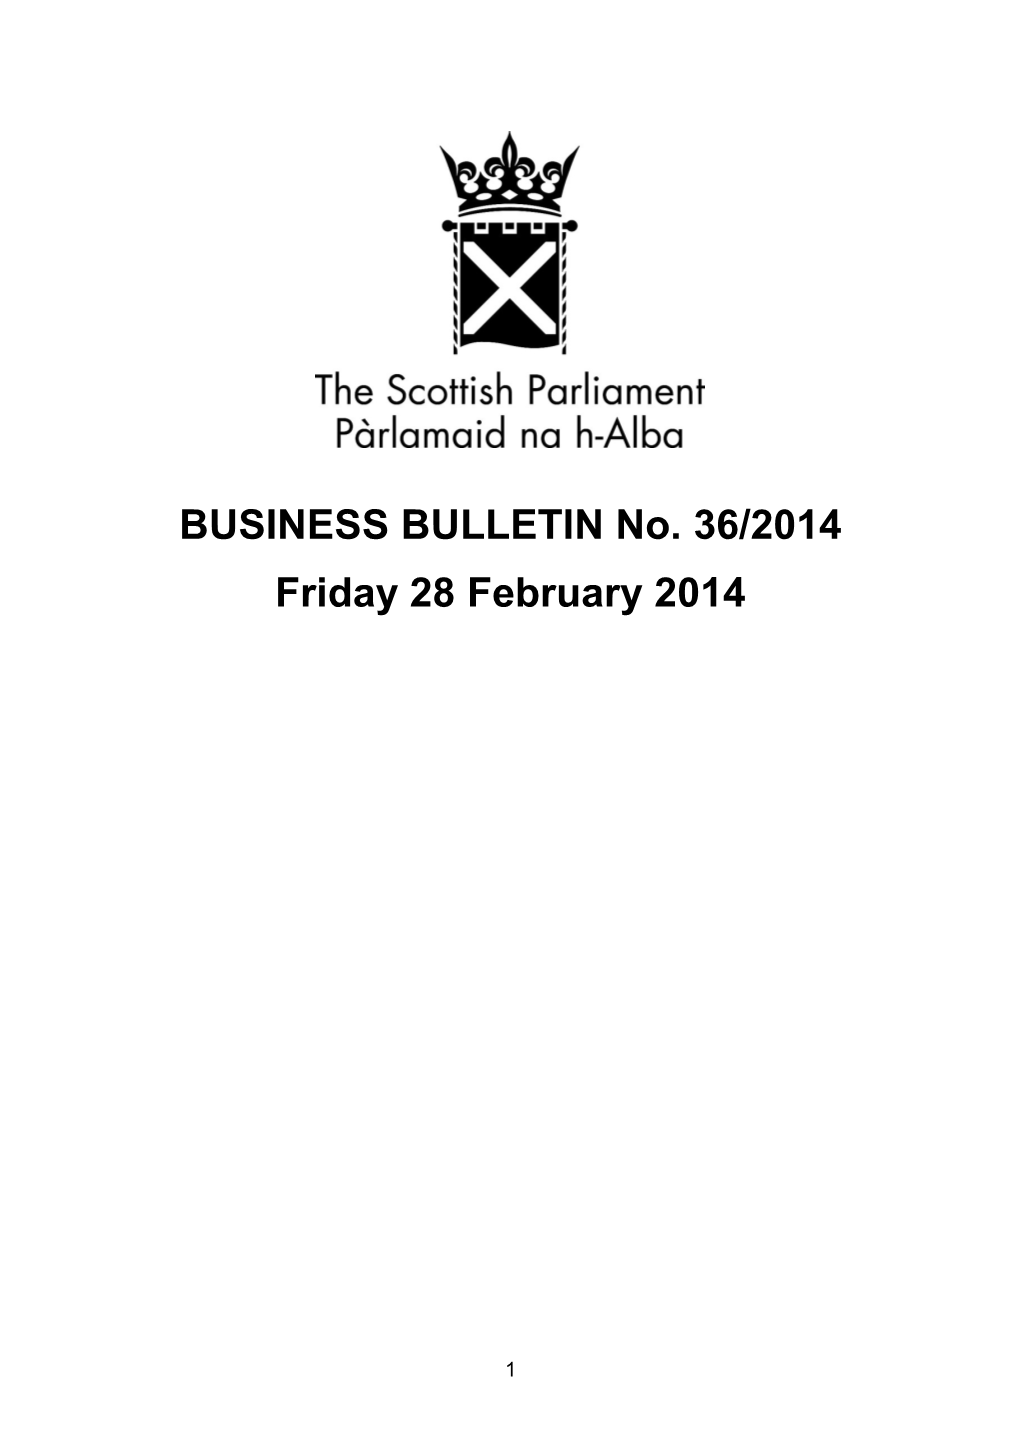 BUSINESS BULLETIN No. 36/2014 Friday 28 February 2014